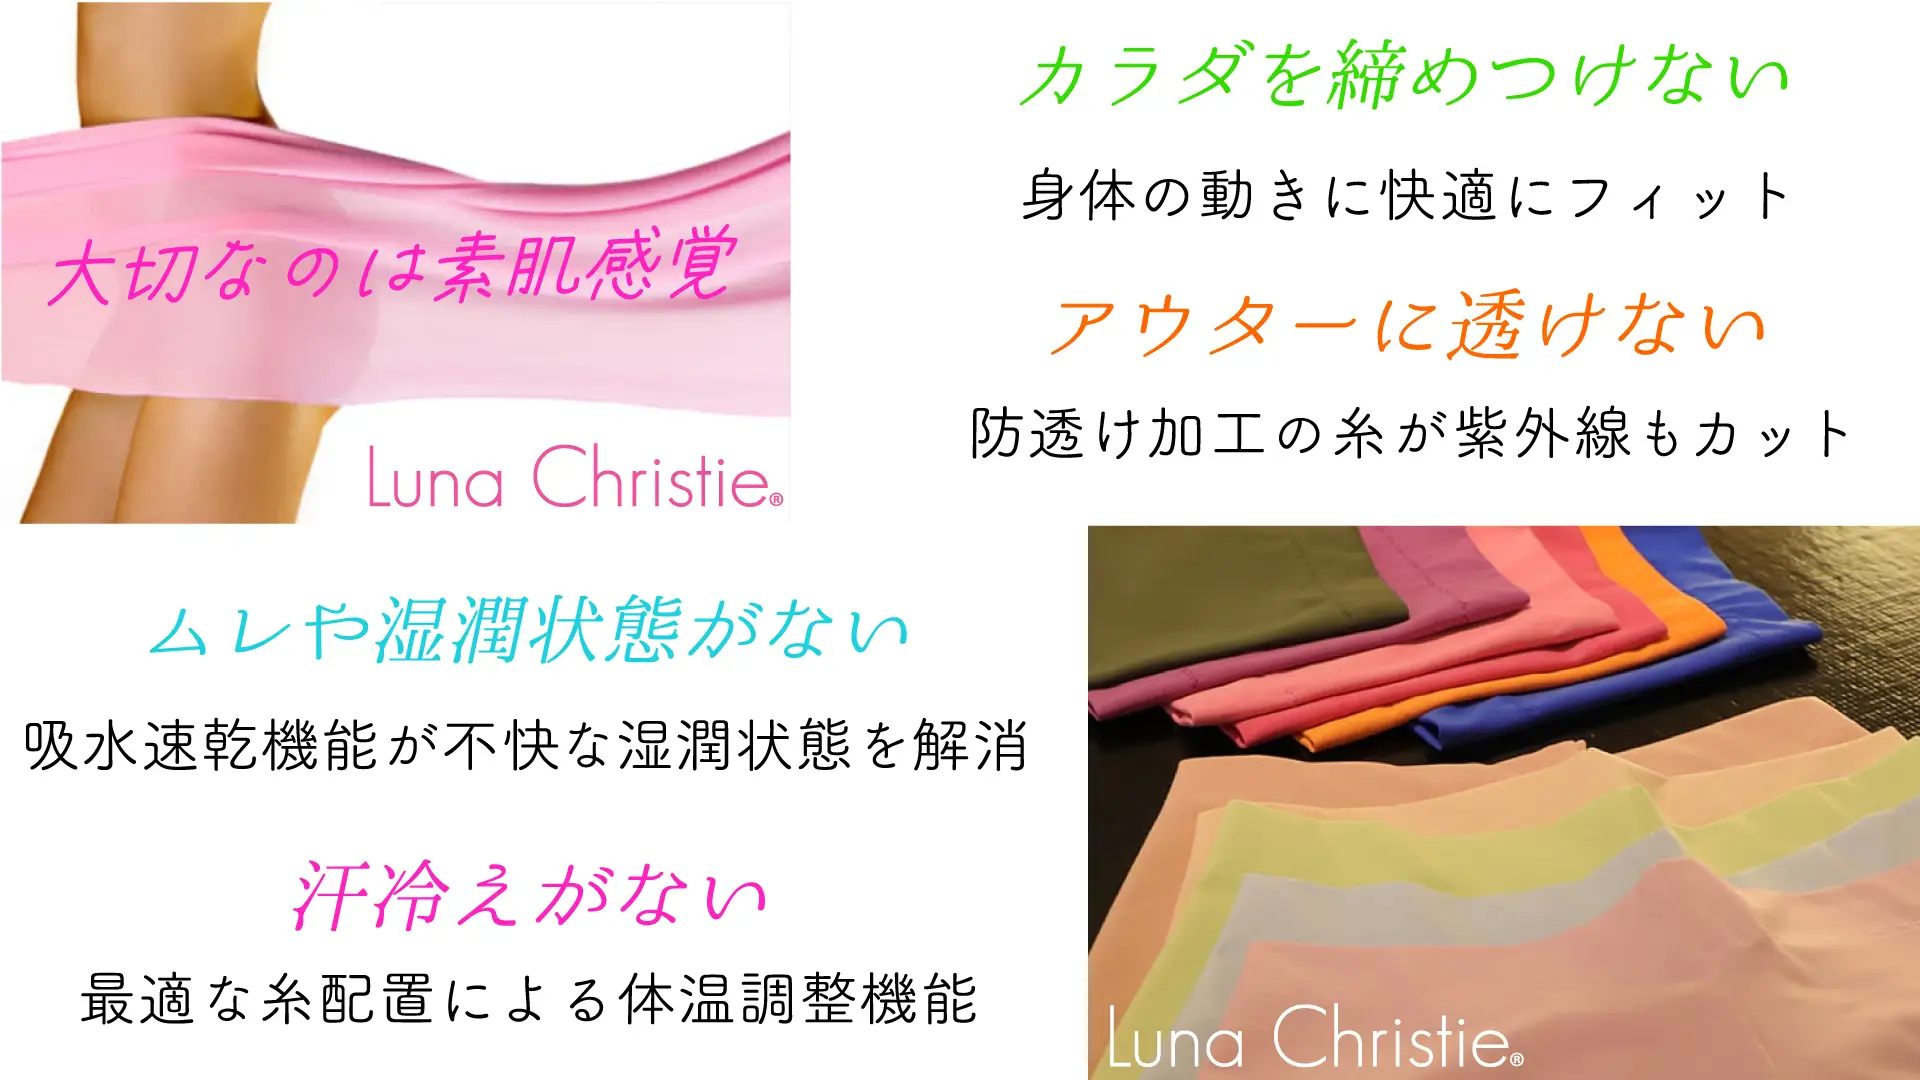 Luna Christie 3088VP